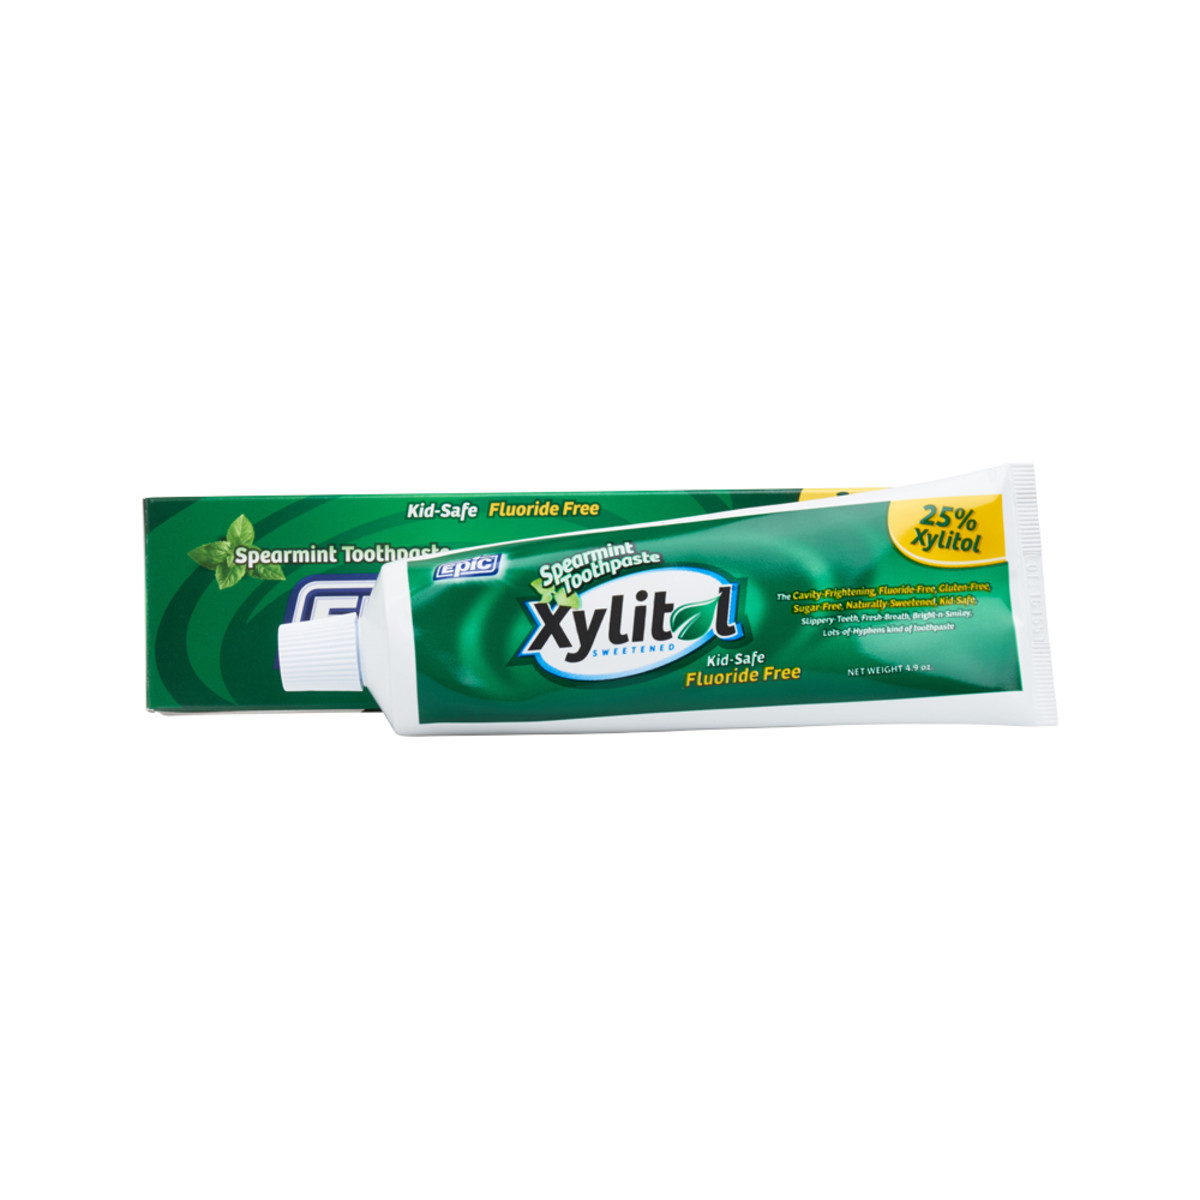 Epic Spearmint Toothpaste with Xylitol (Fluoride Free) 4.9oz